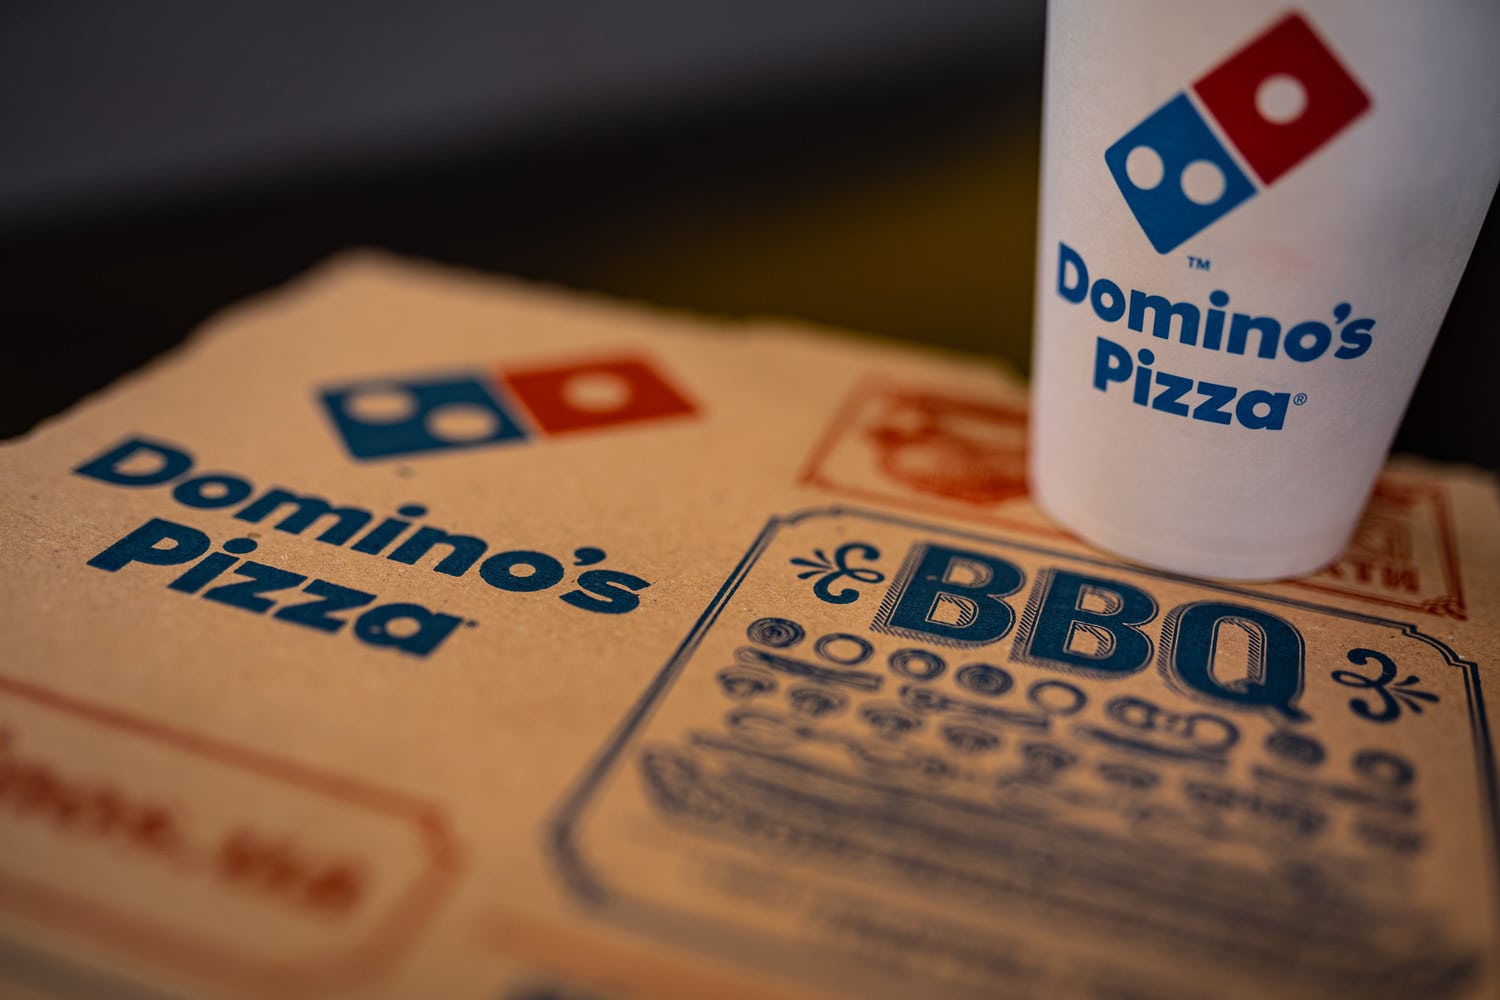 Domino's Pizza Box detail. 